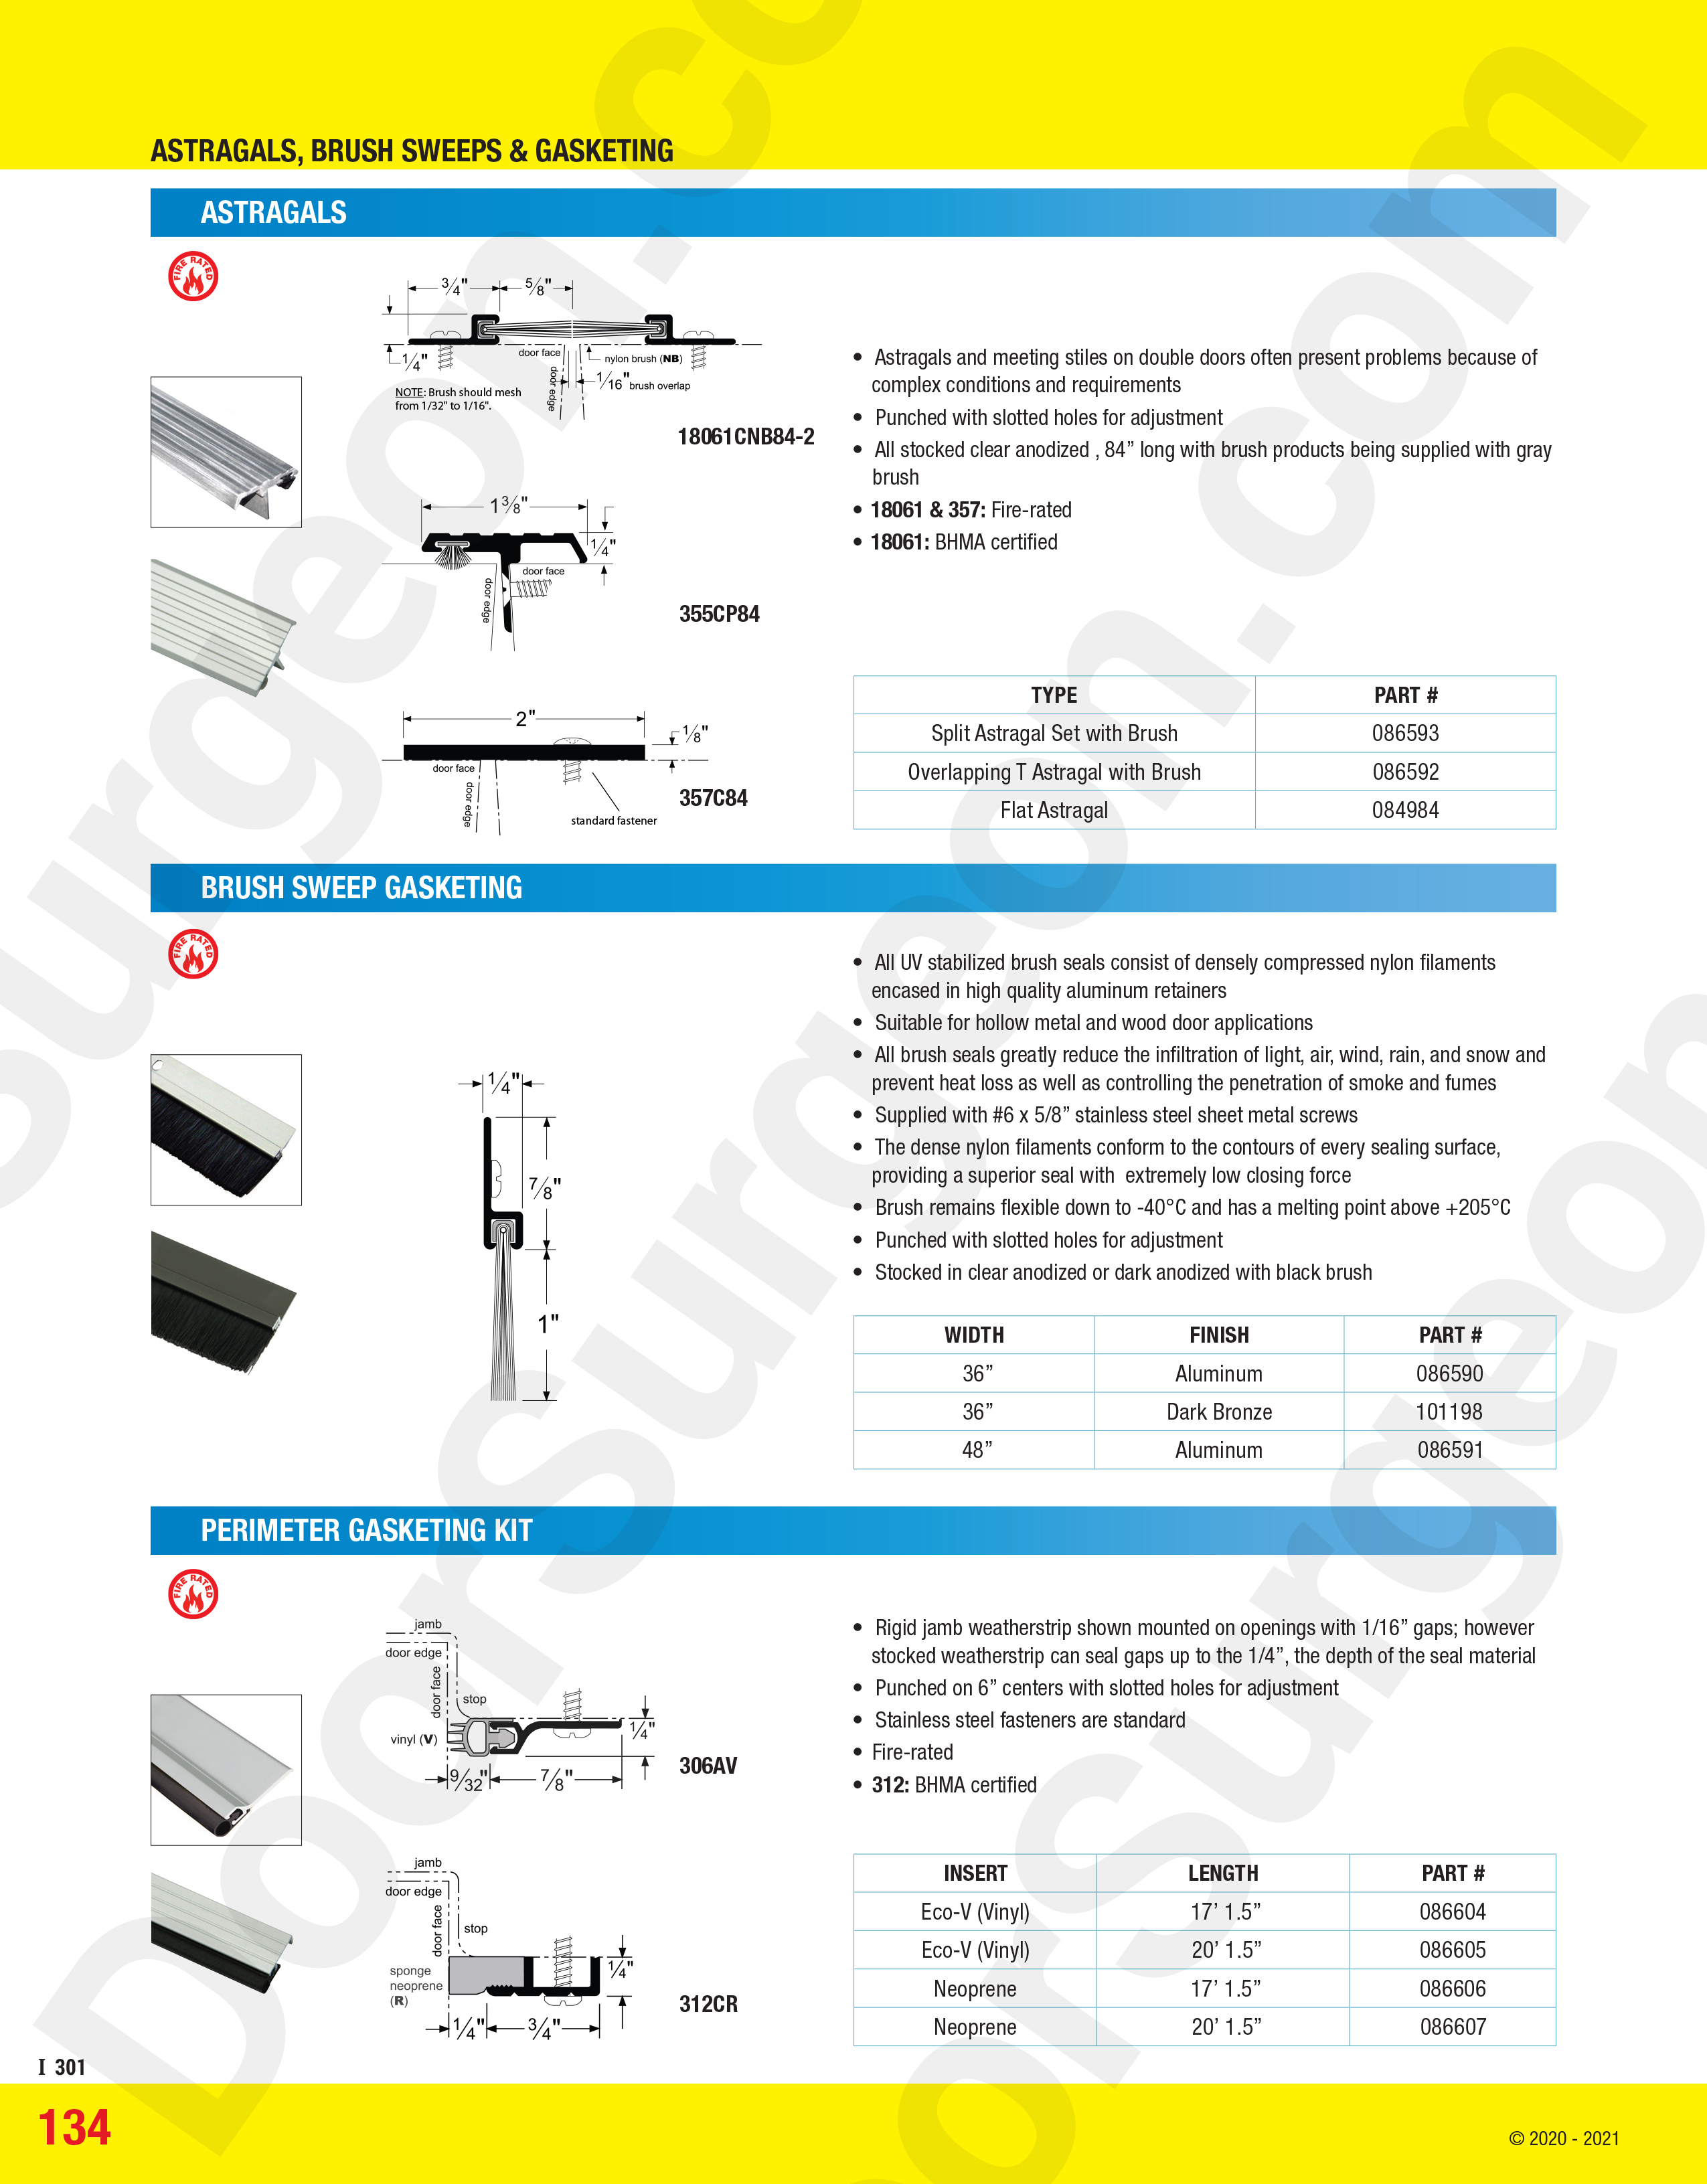 Brush sweeps & astragals for glass-aluminum doors - perimeter gasket kits on standard commercial doors.